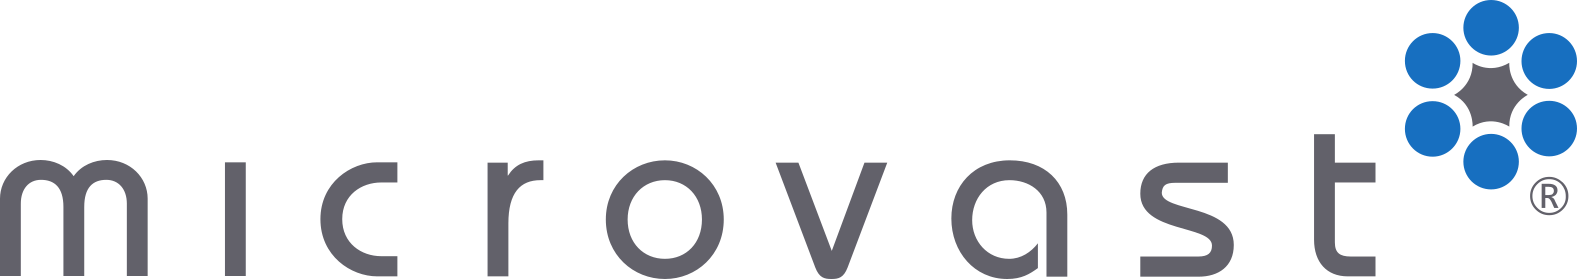 Microvast logo large (transparent PNG)